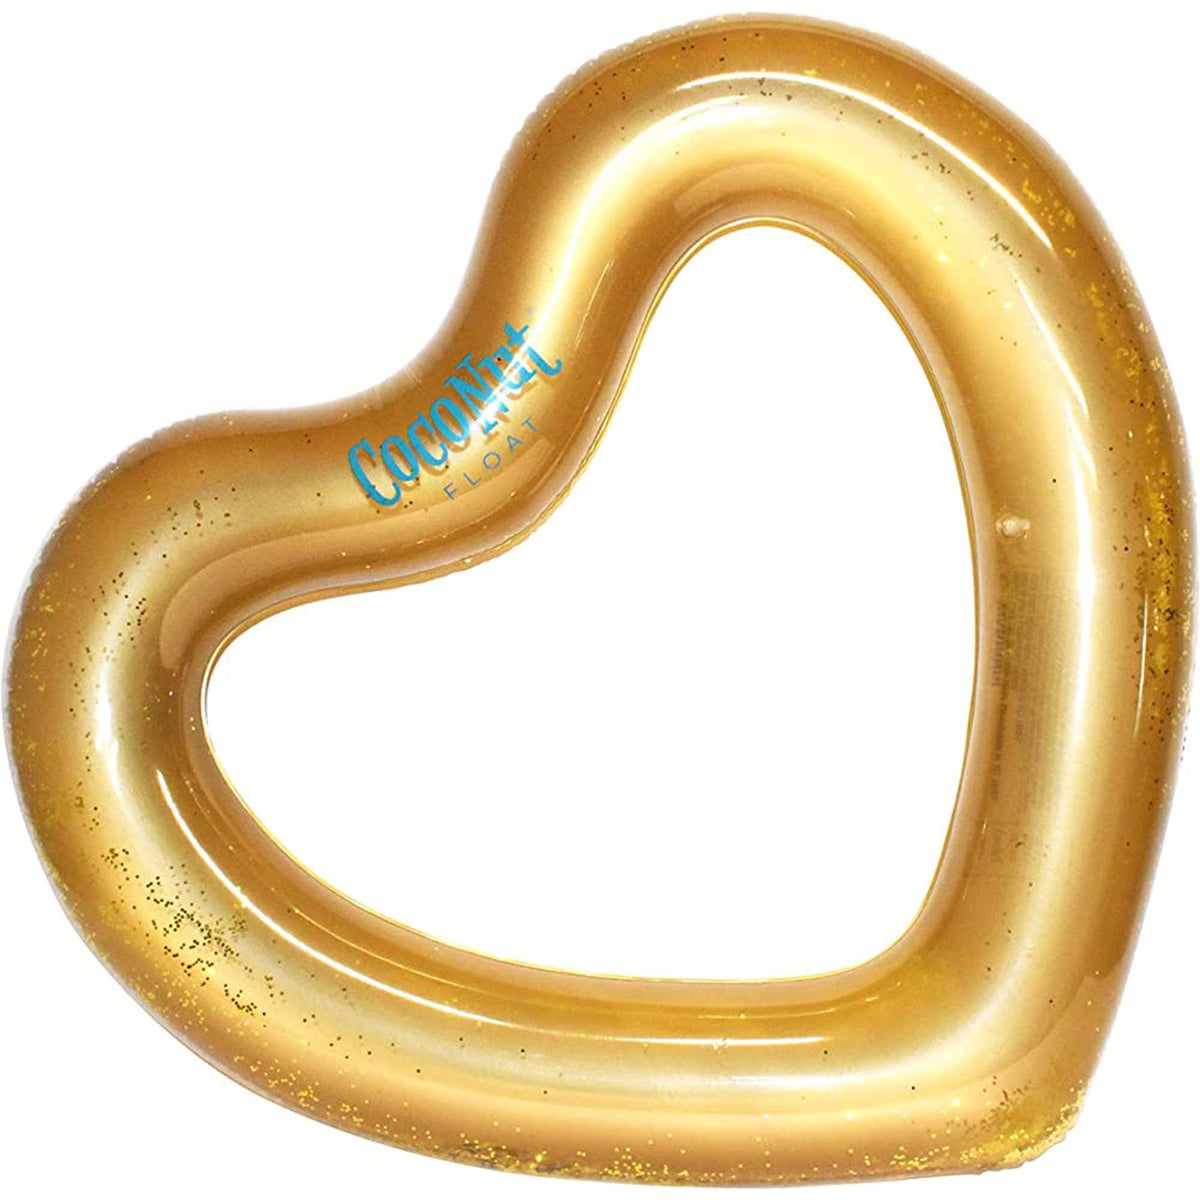 SALUS BRANDS Summer Gold Glitter Heart Pool Float, 1 Count 810034400970